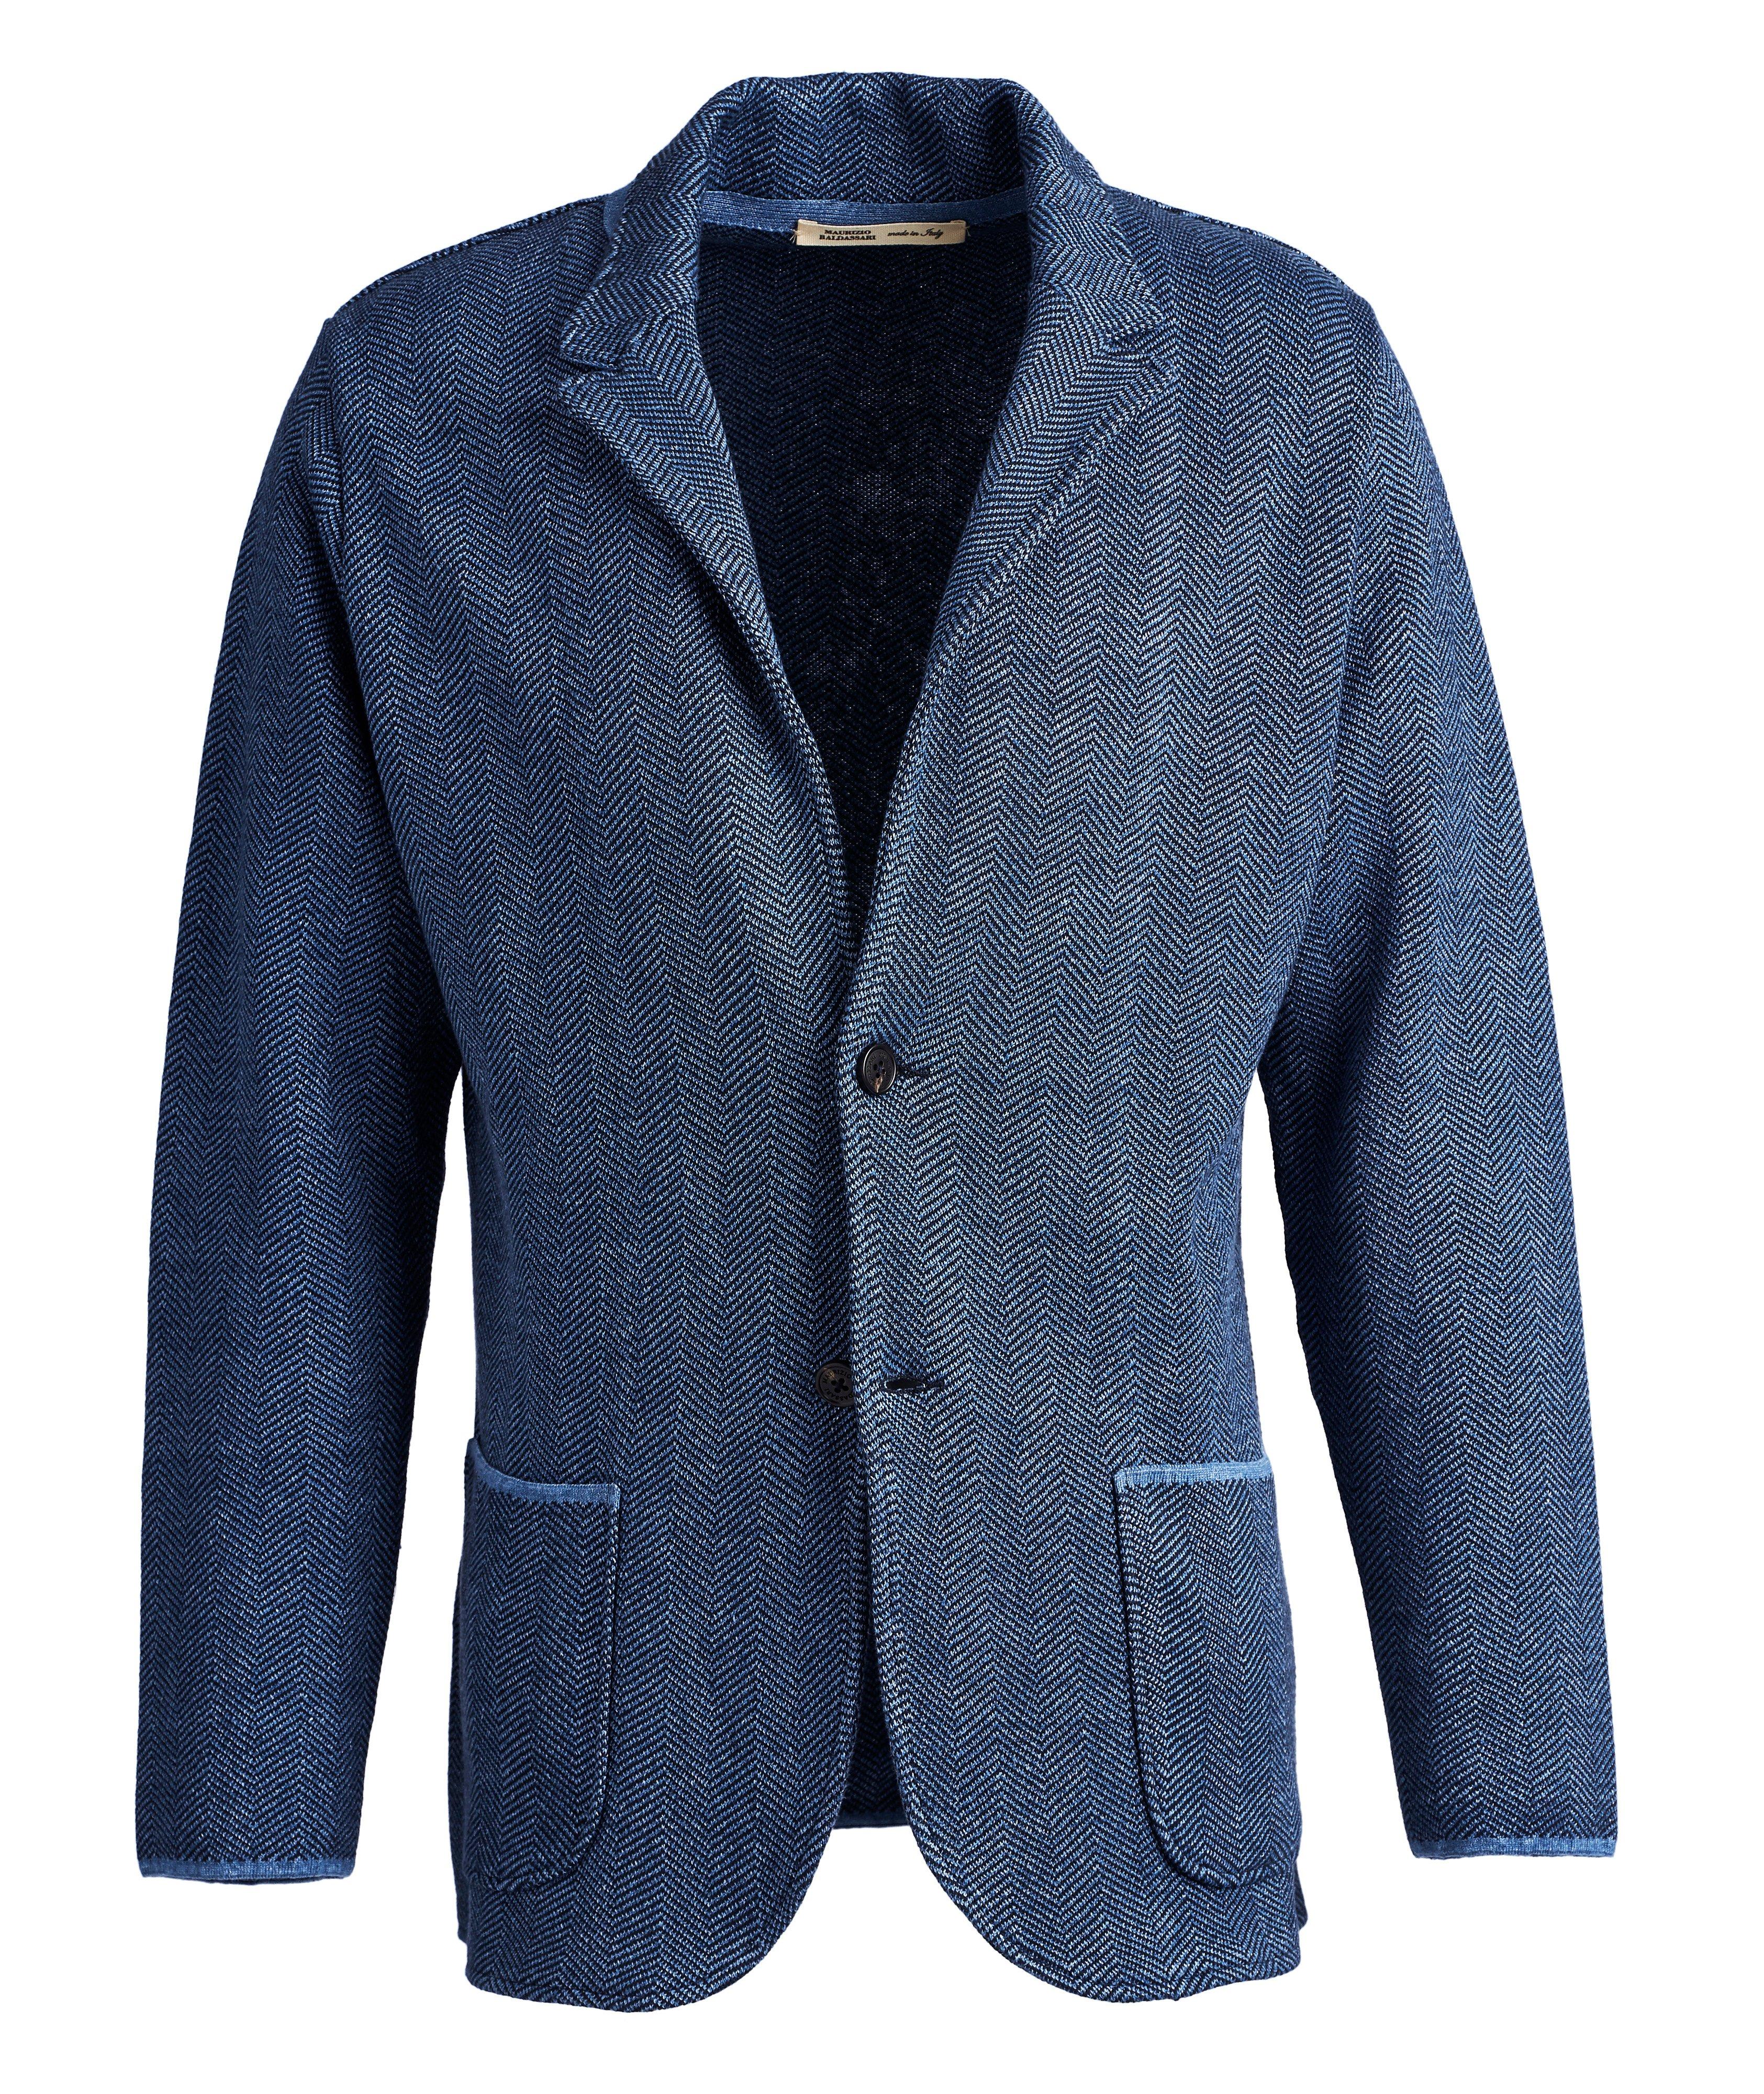 Linen Cotton Herringbone Sweater Jacket image 0